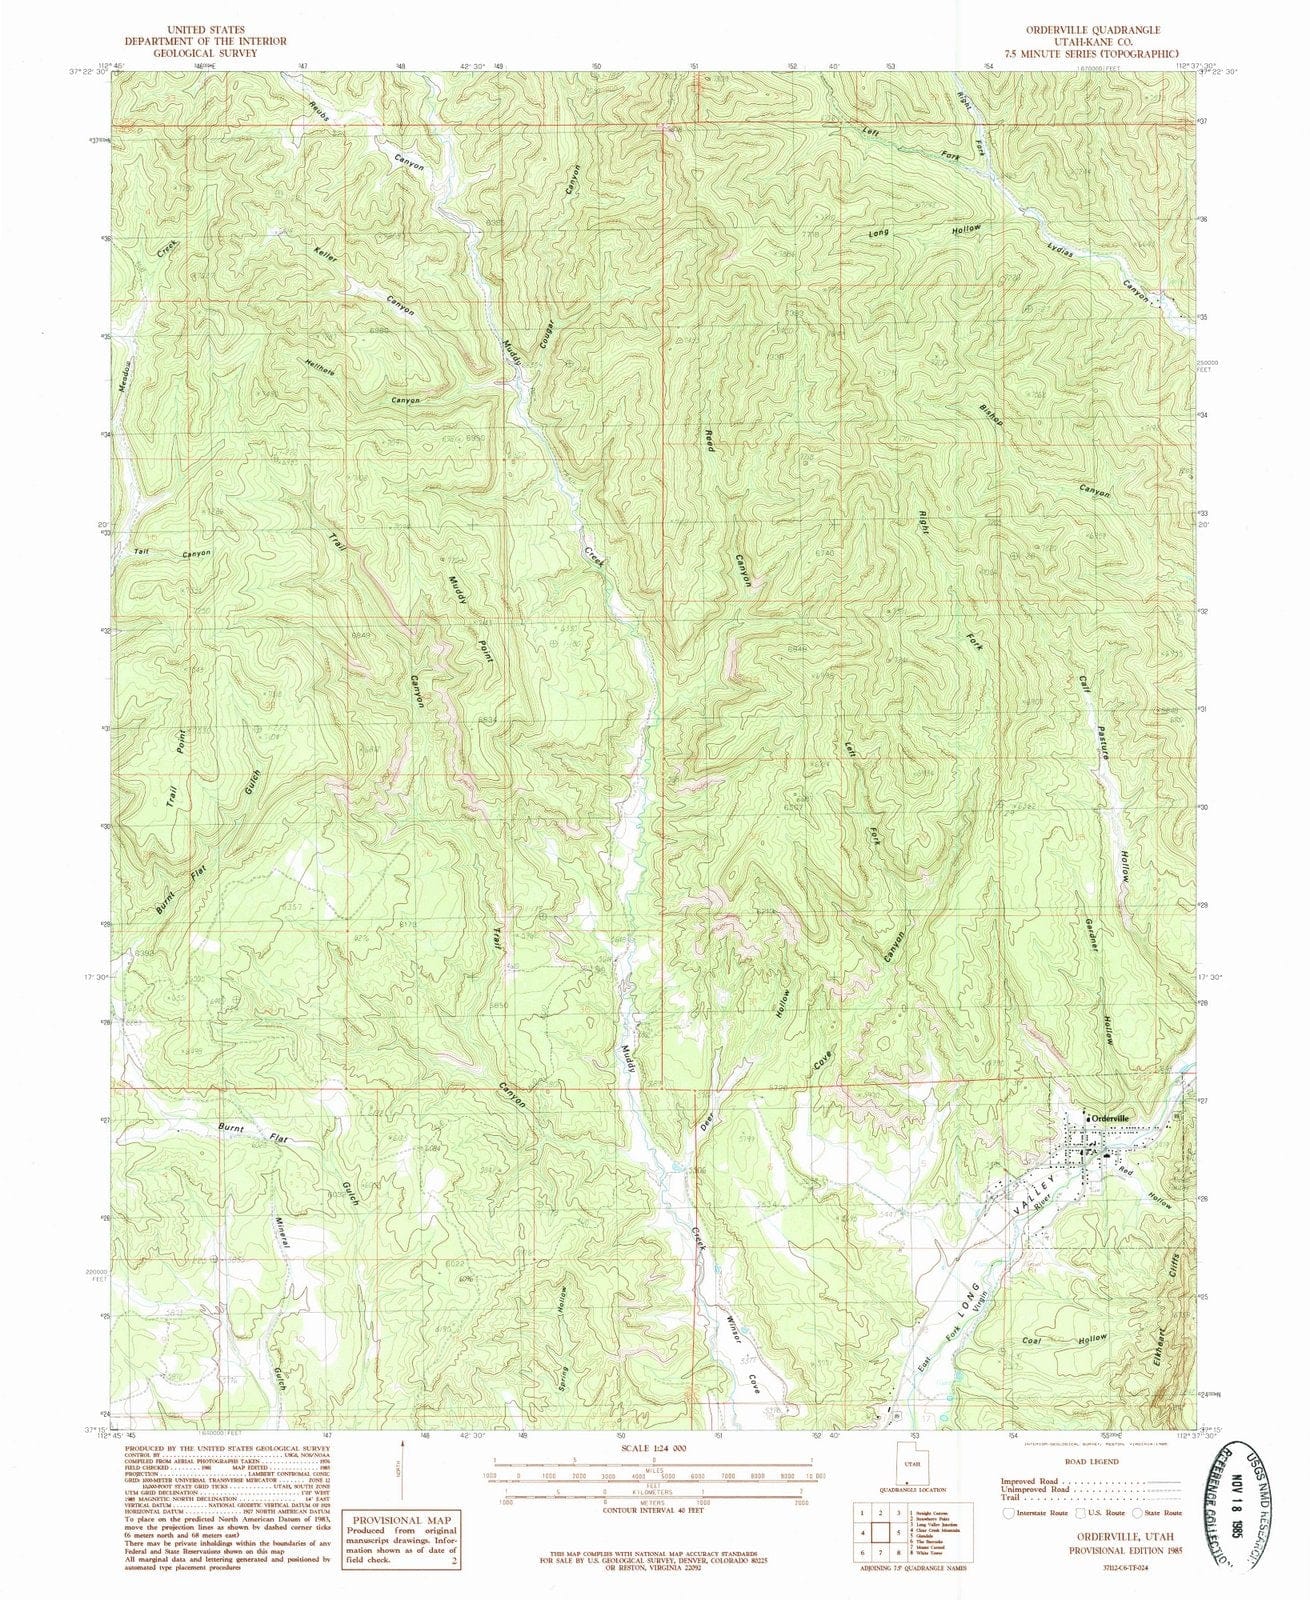 1985 Orderville, UT - Utah - USGS Topographic Map